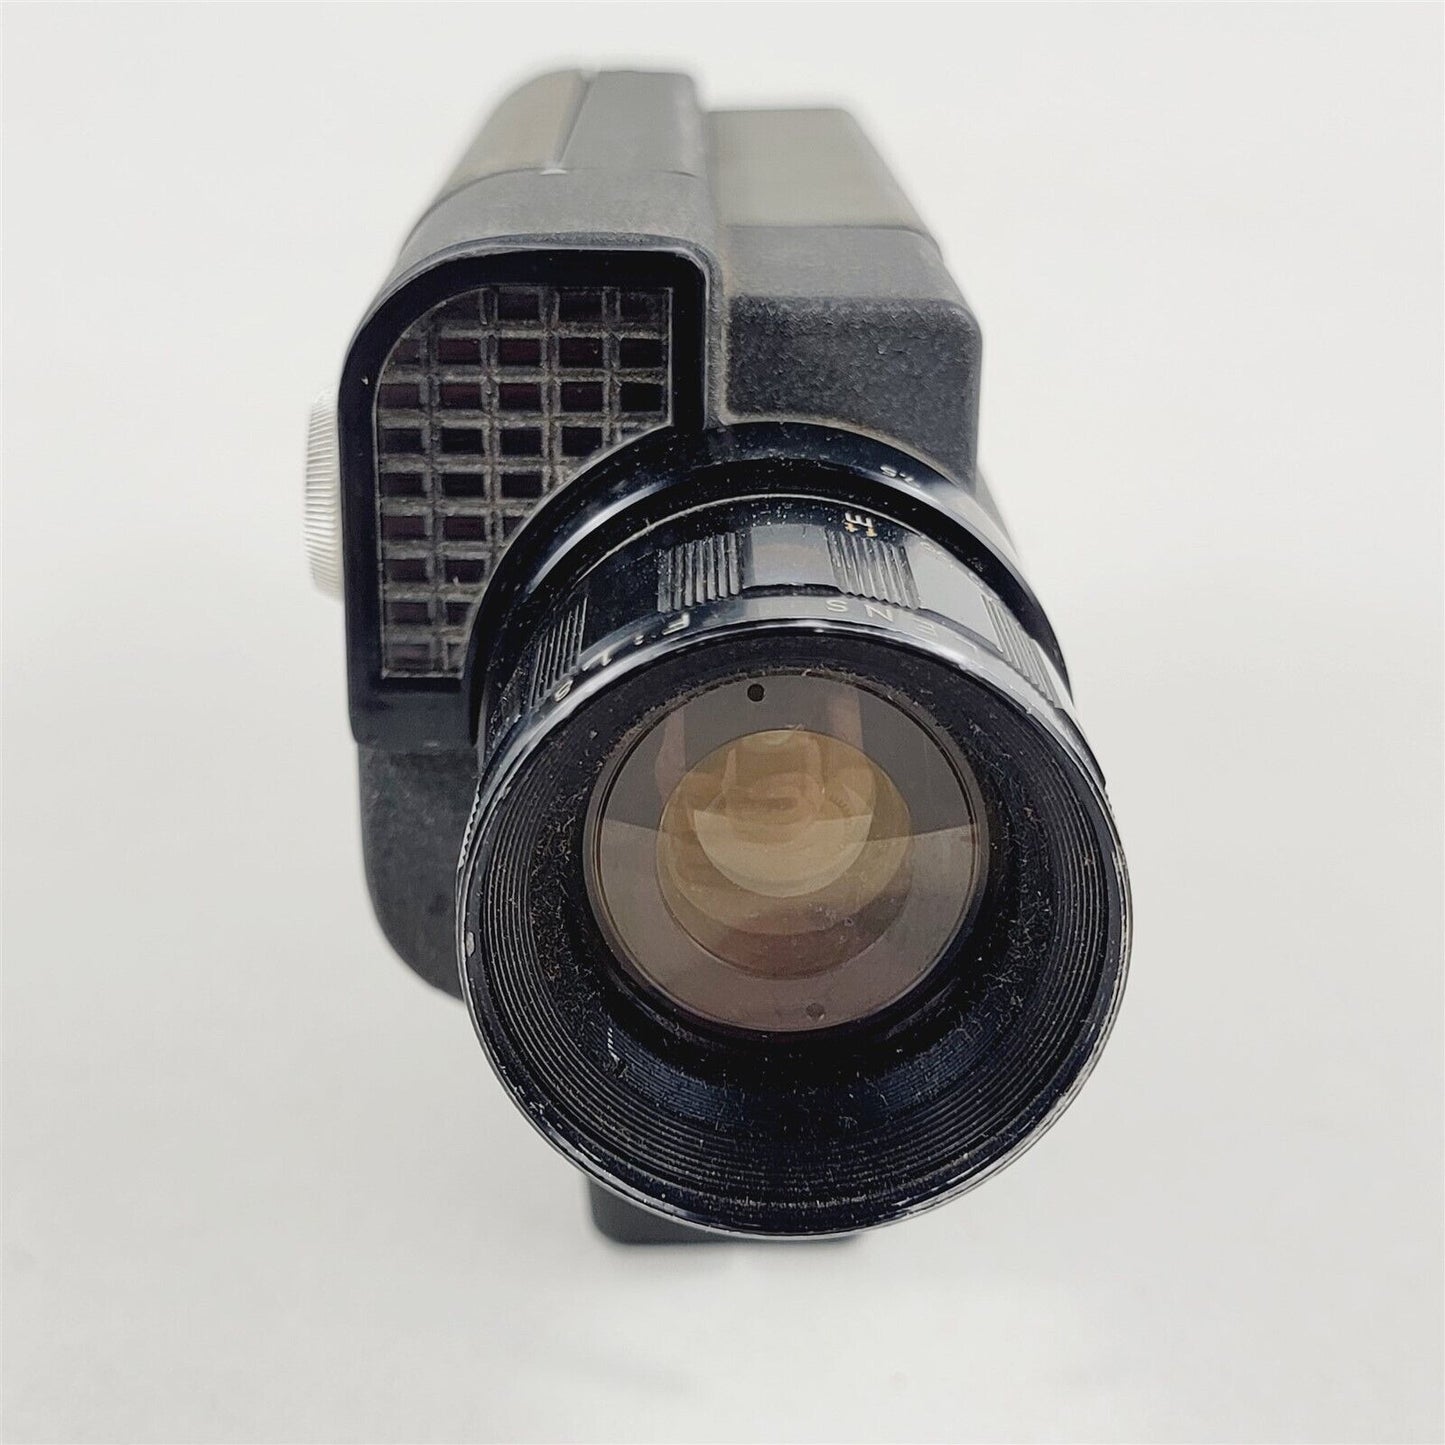 8mm Chinon Zoom 8 Untested 331999 Reflex Lens Movie Camera Vintage - Untested